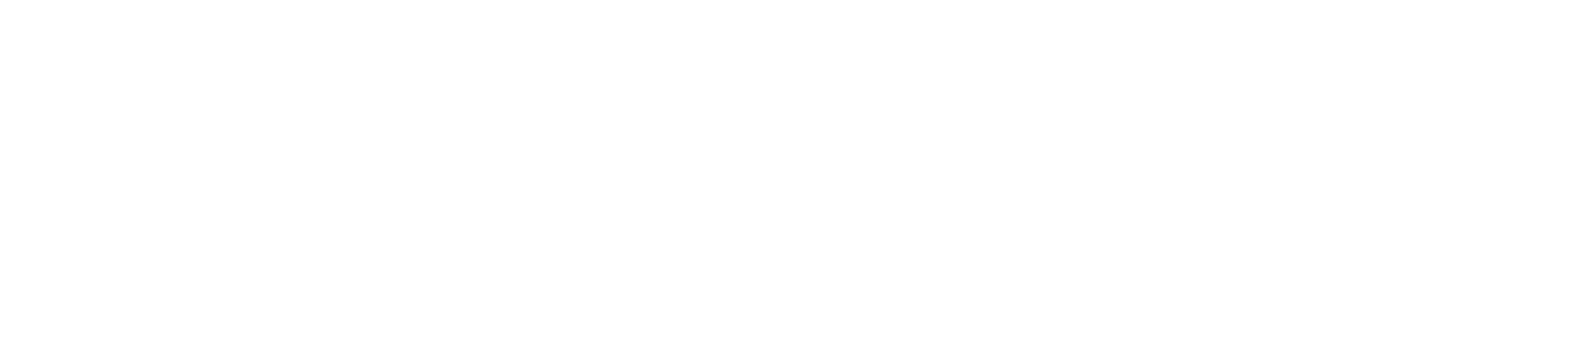 Playtech logo large for dark backgrounds (transparent PNG)